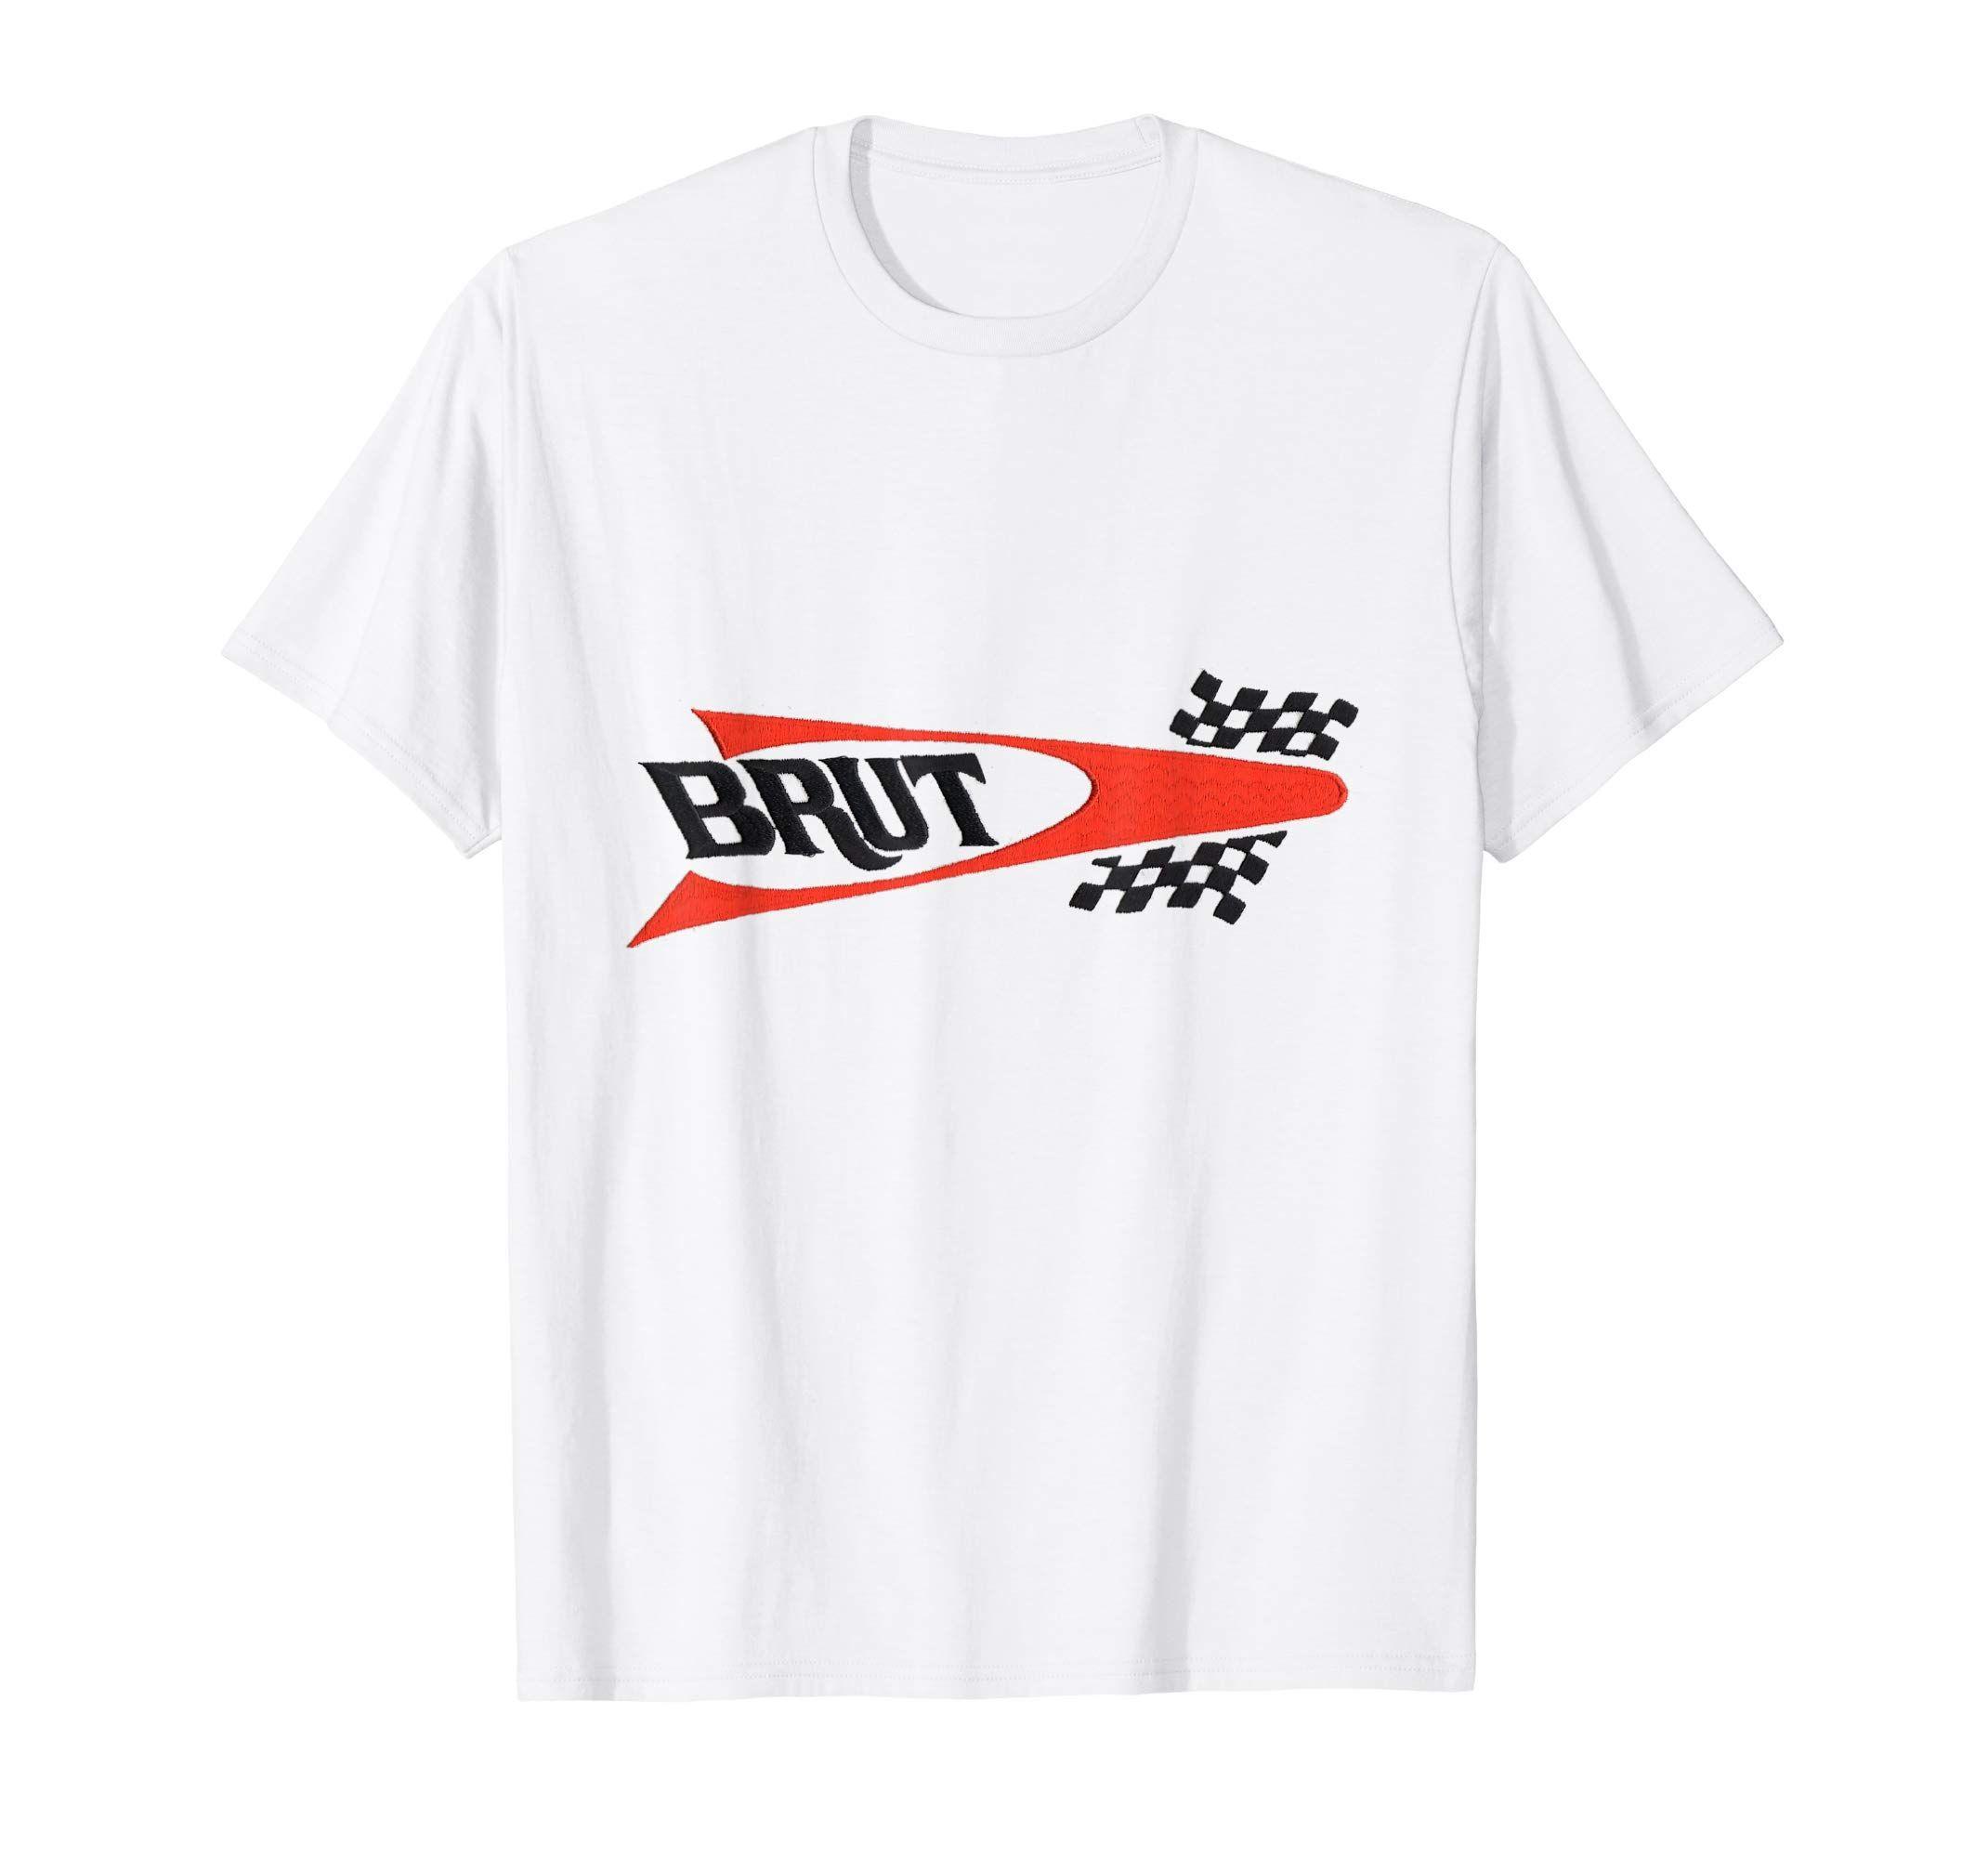 Snowmobile Logo - Amazon.com: Brut Snowmobile Logo Shirt: Clothing